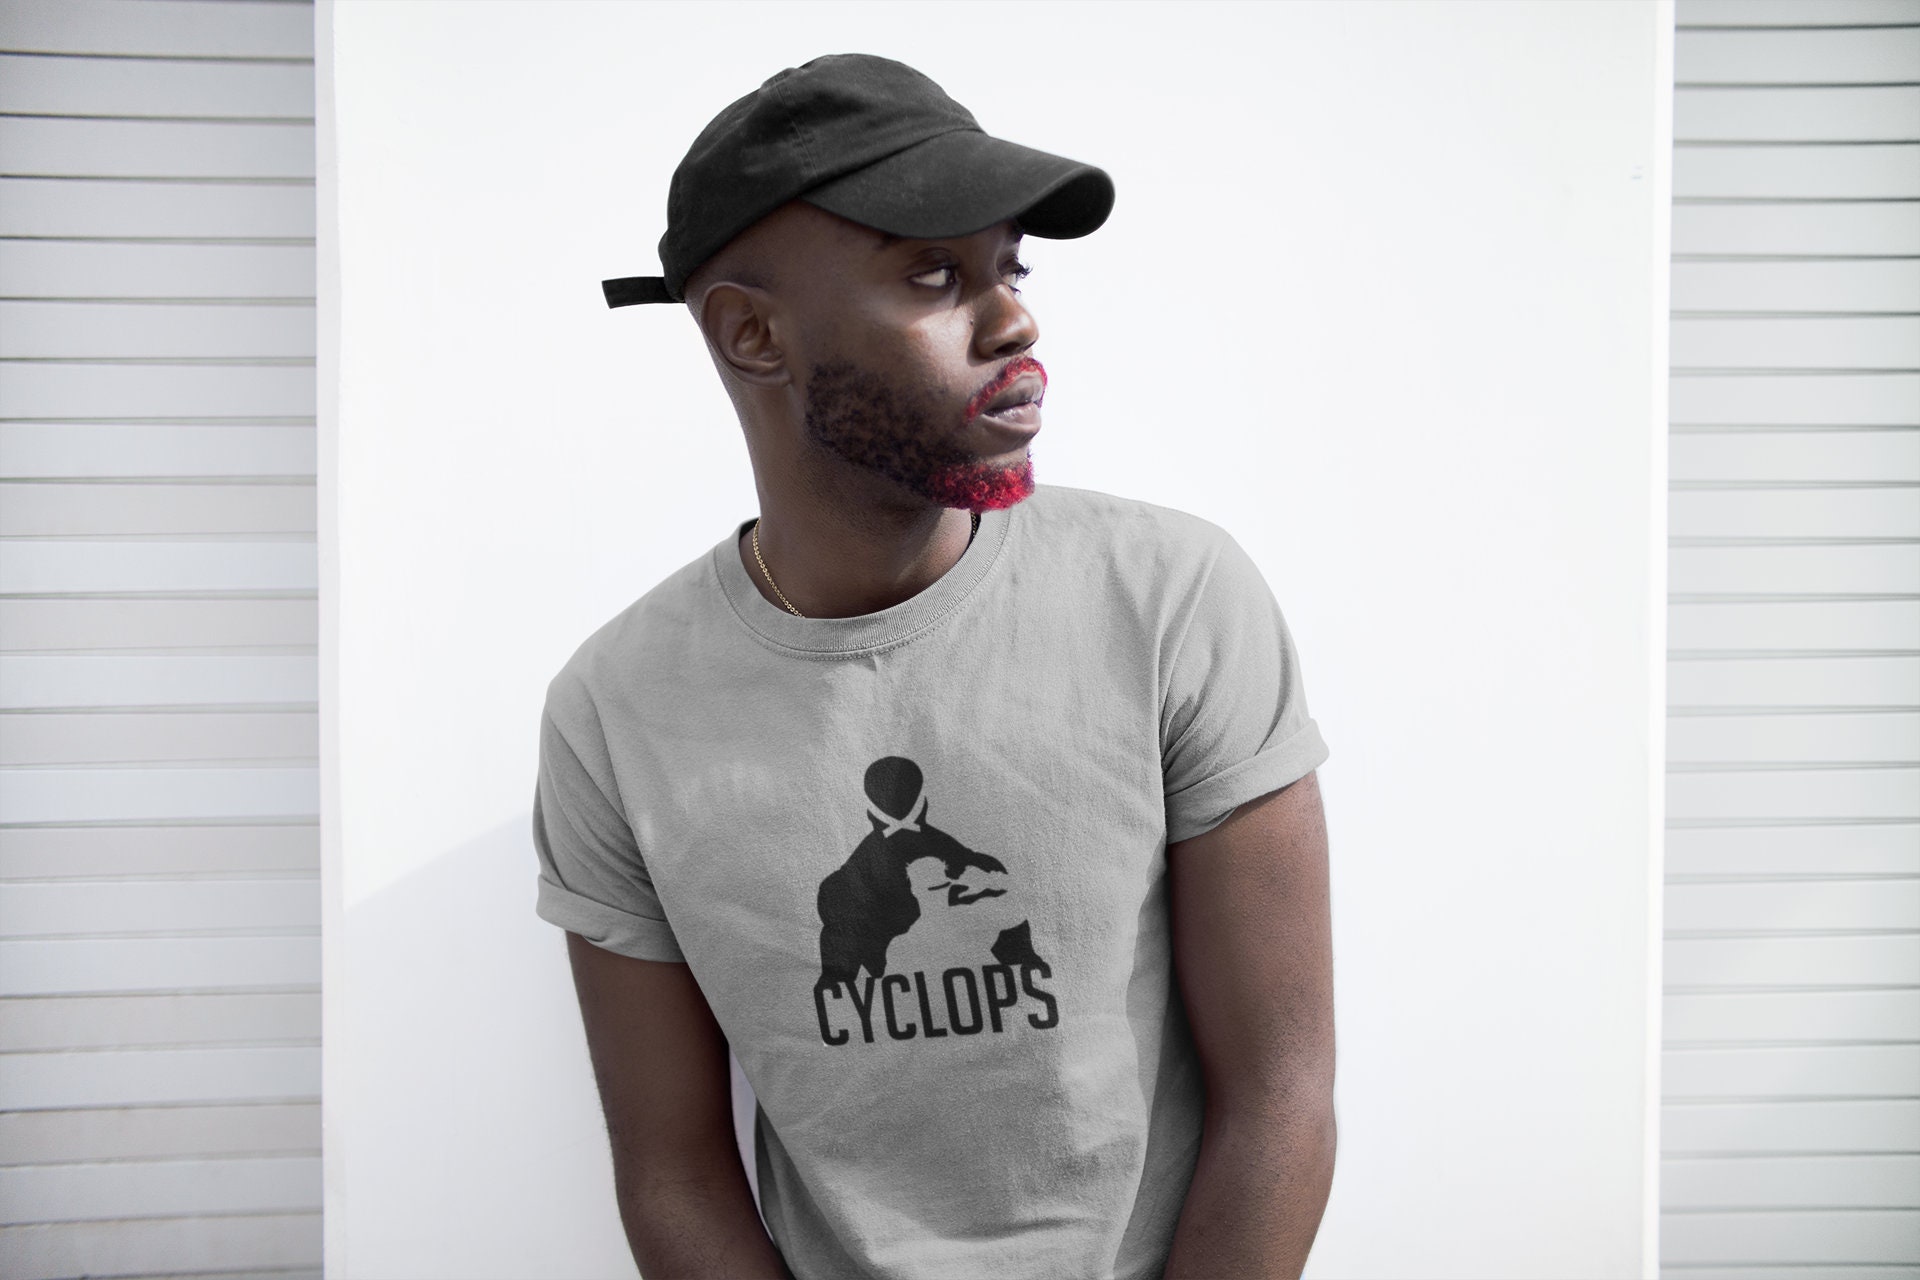 Cyclops Inspired T-shirt /cyclops Shirt / Adult Unisex T-shirt | Etsy